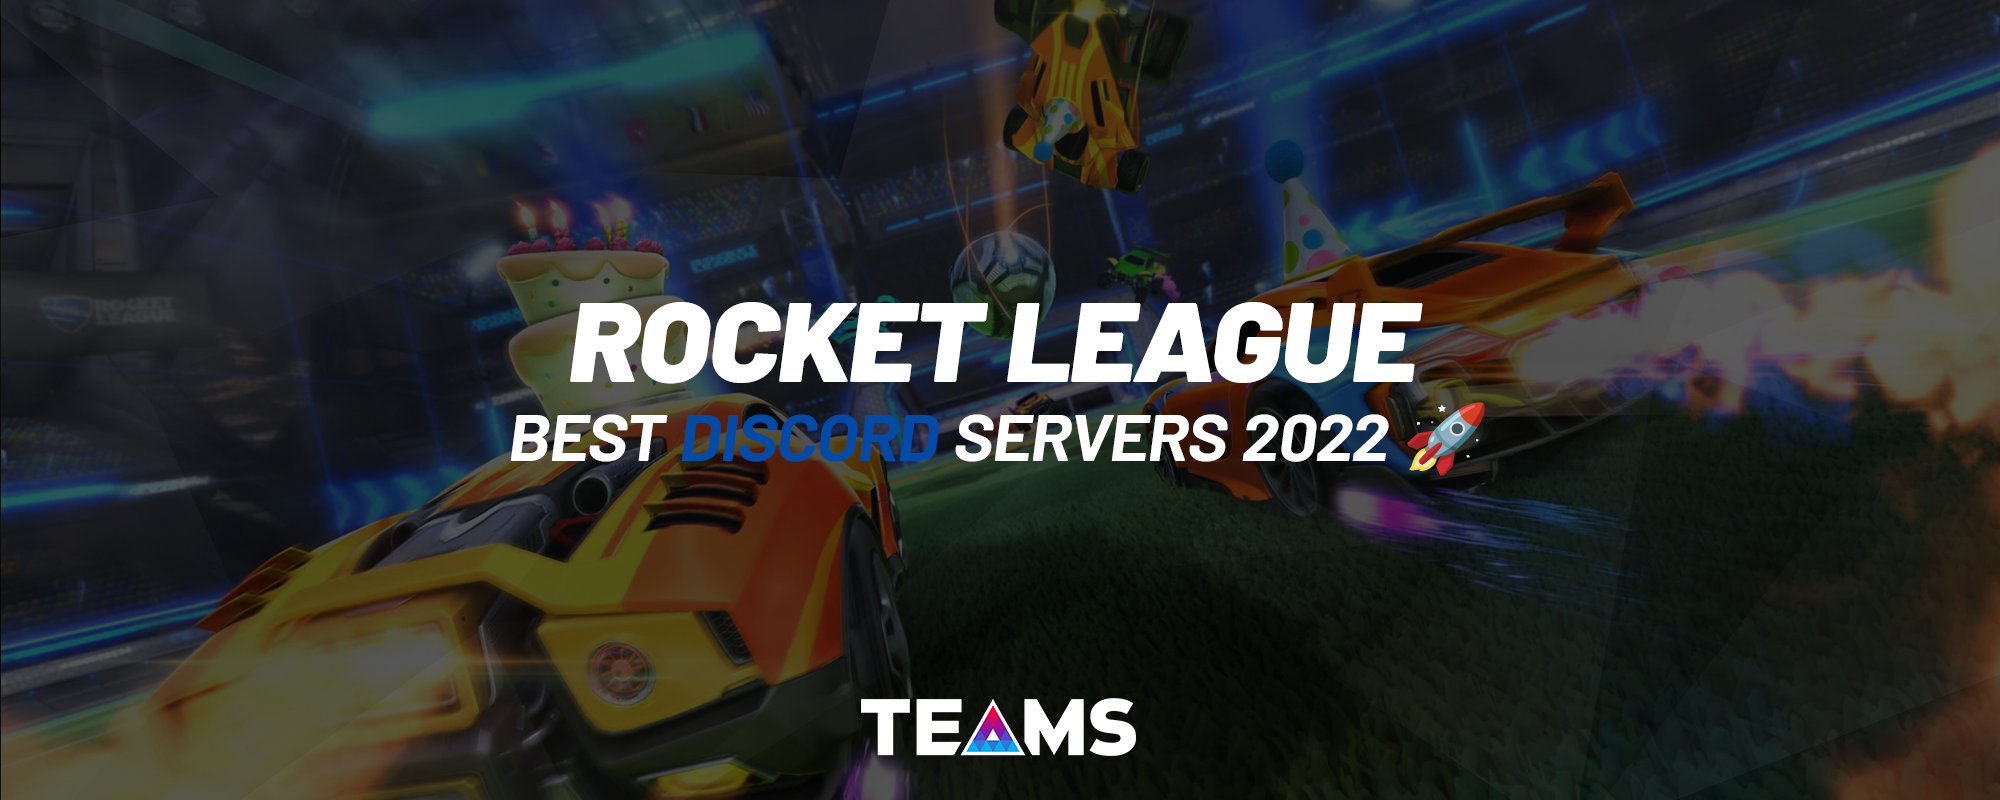 The Best Rocket League Discord Servers in 2022